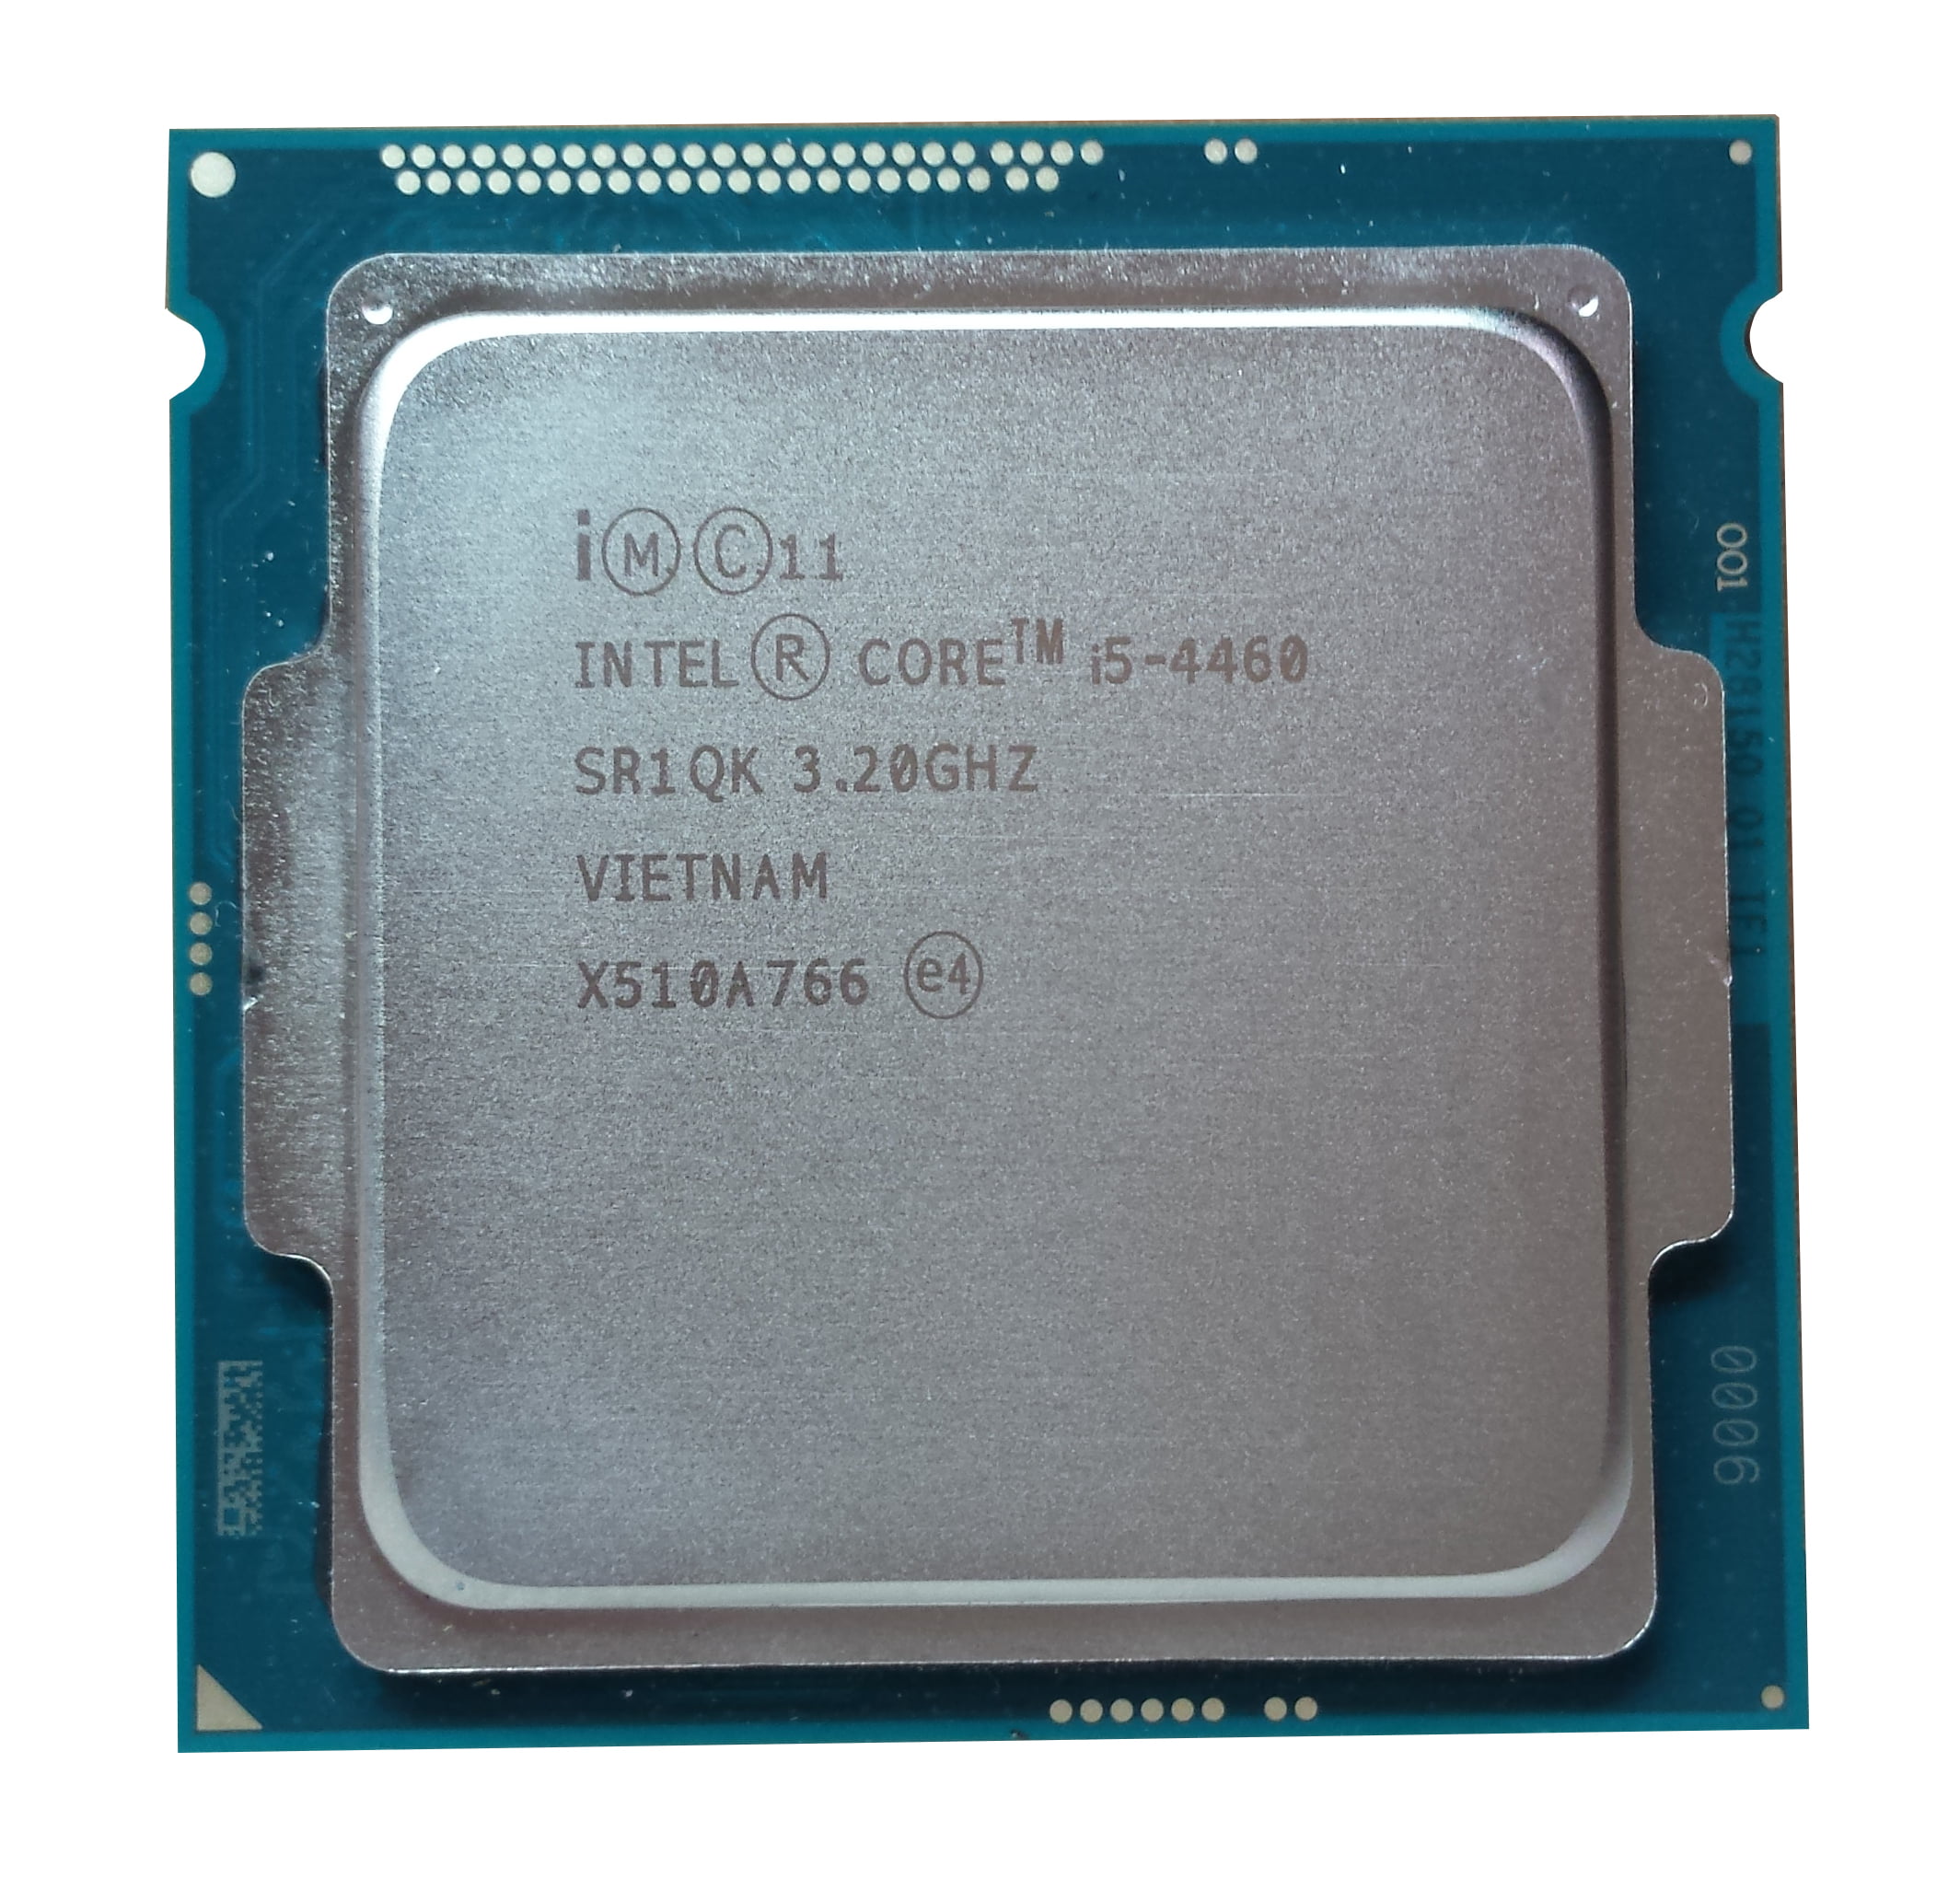 Refurbished Intel Core i5-4460 3.2GHz LGA 1150/Socket H3 5 GT/s SR1QK